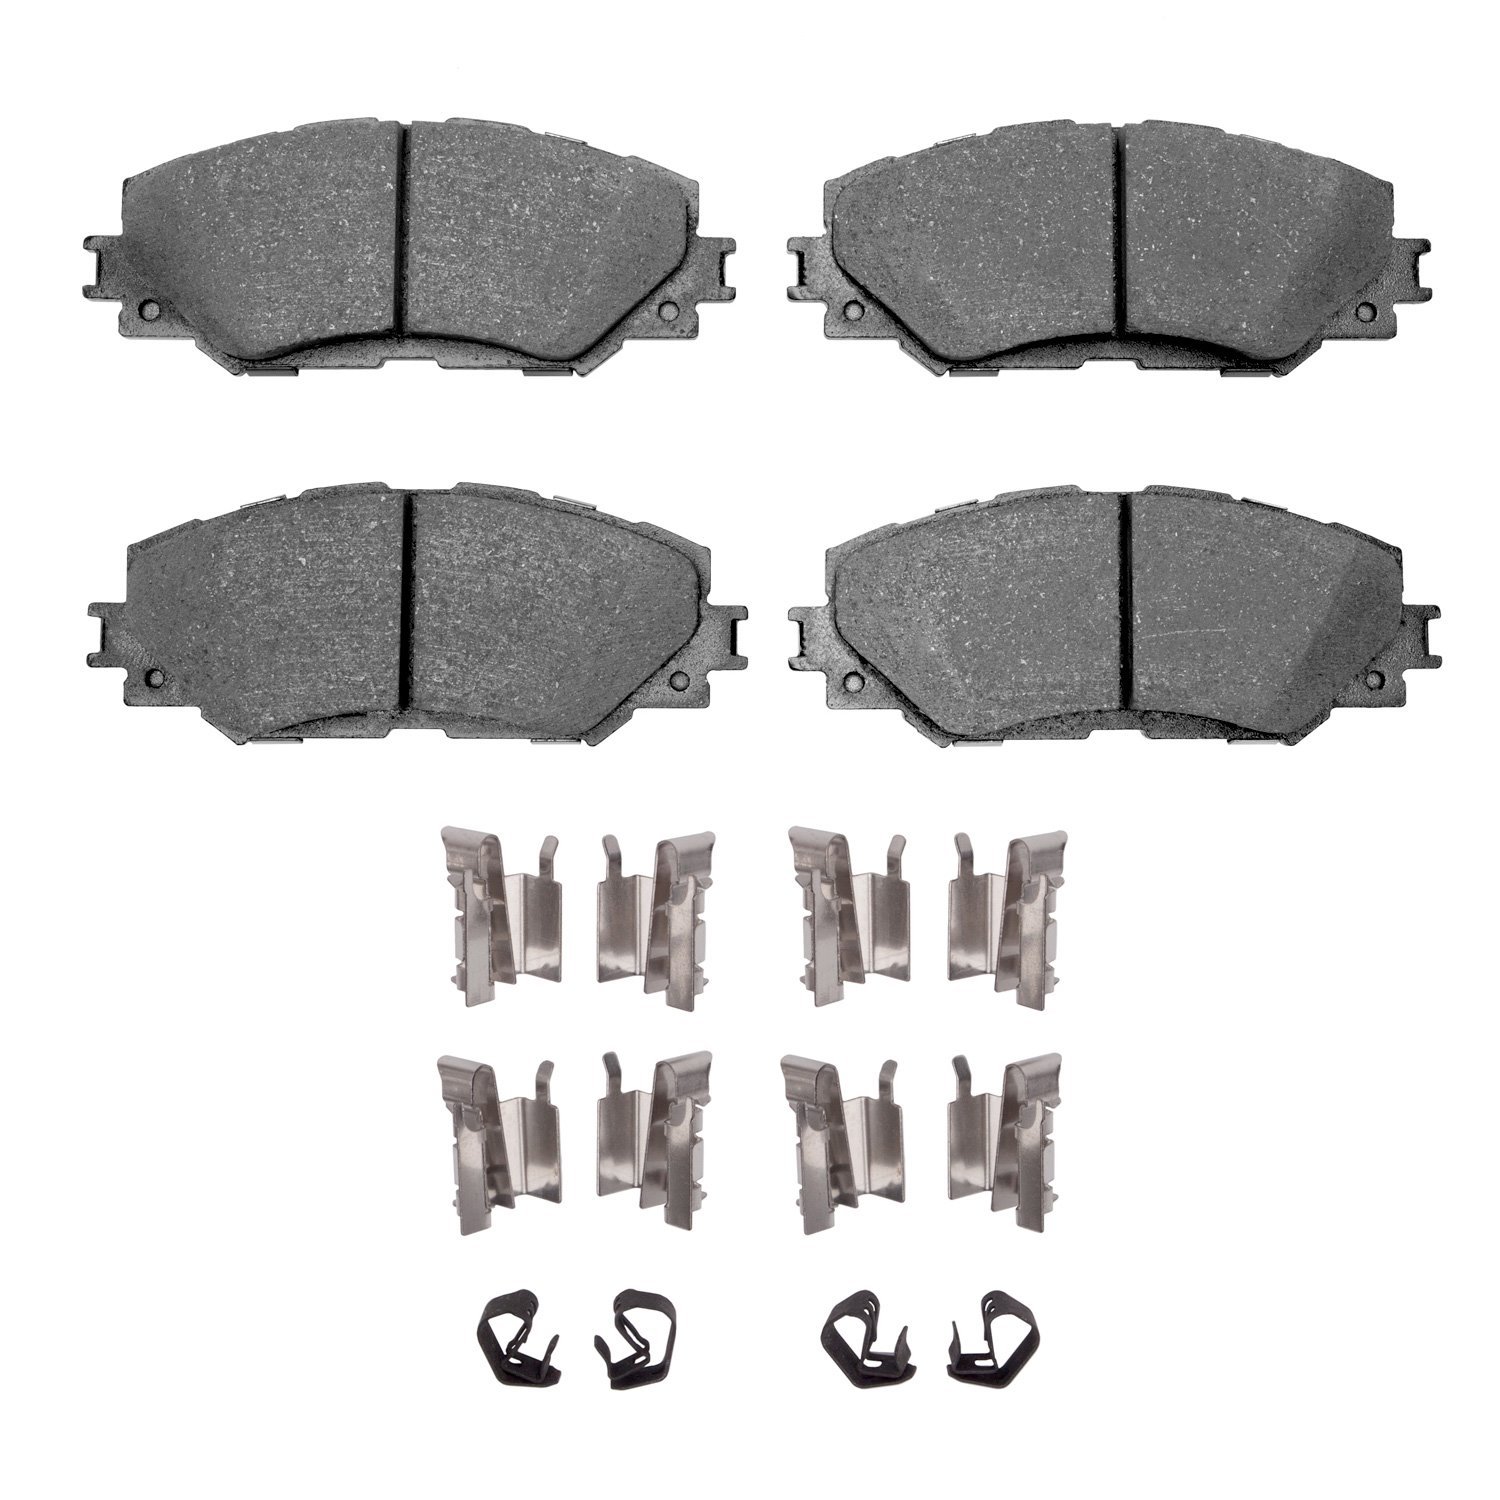 1551-1210-01 5000 Advanced Ceramic Brake Pads & Hardware Kit, 2006-2019 Multiple Makes/Models, Position: Front